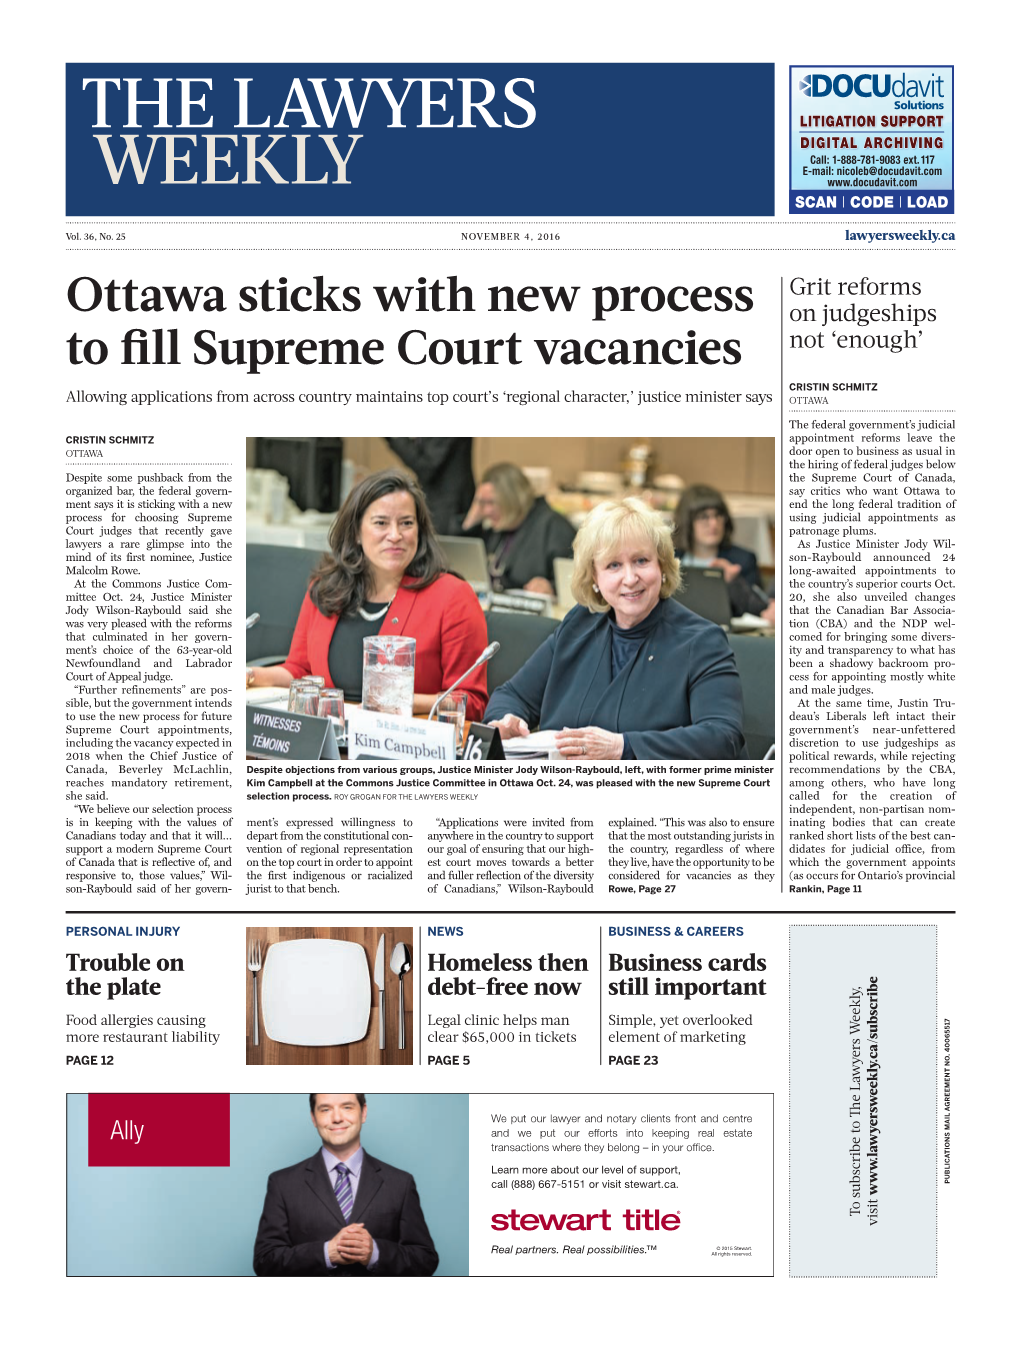 Ottawa Sticks with New Process to Fill Supreme Court Vacancies